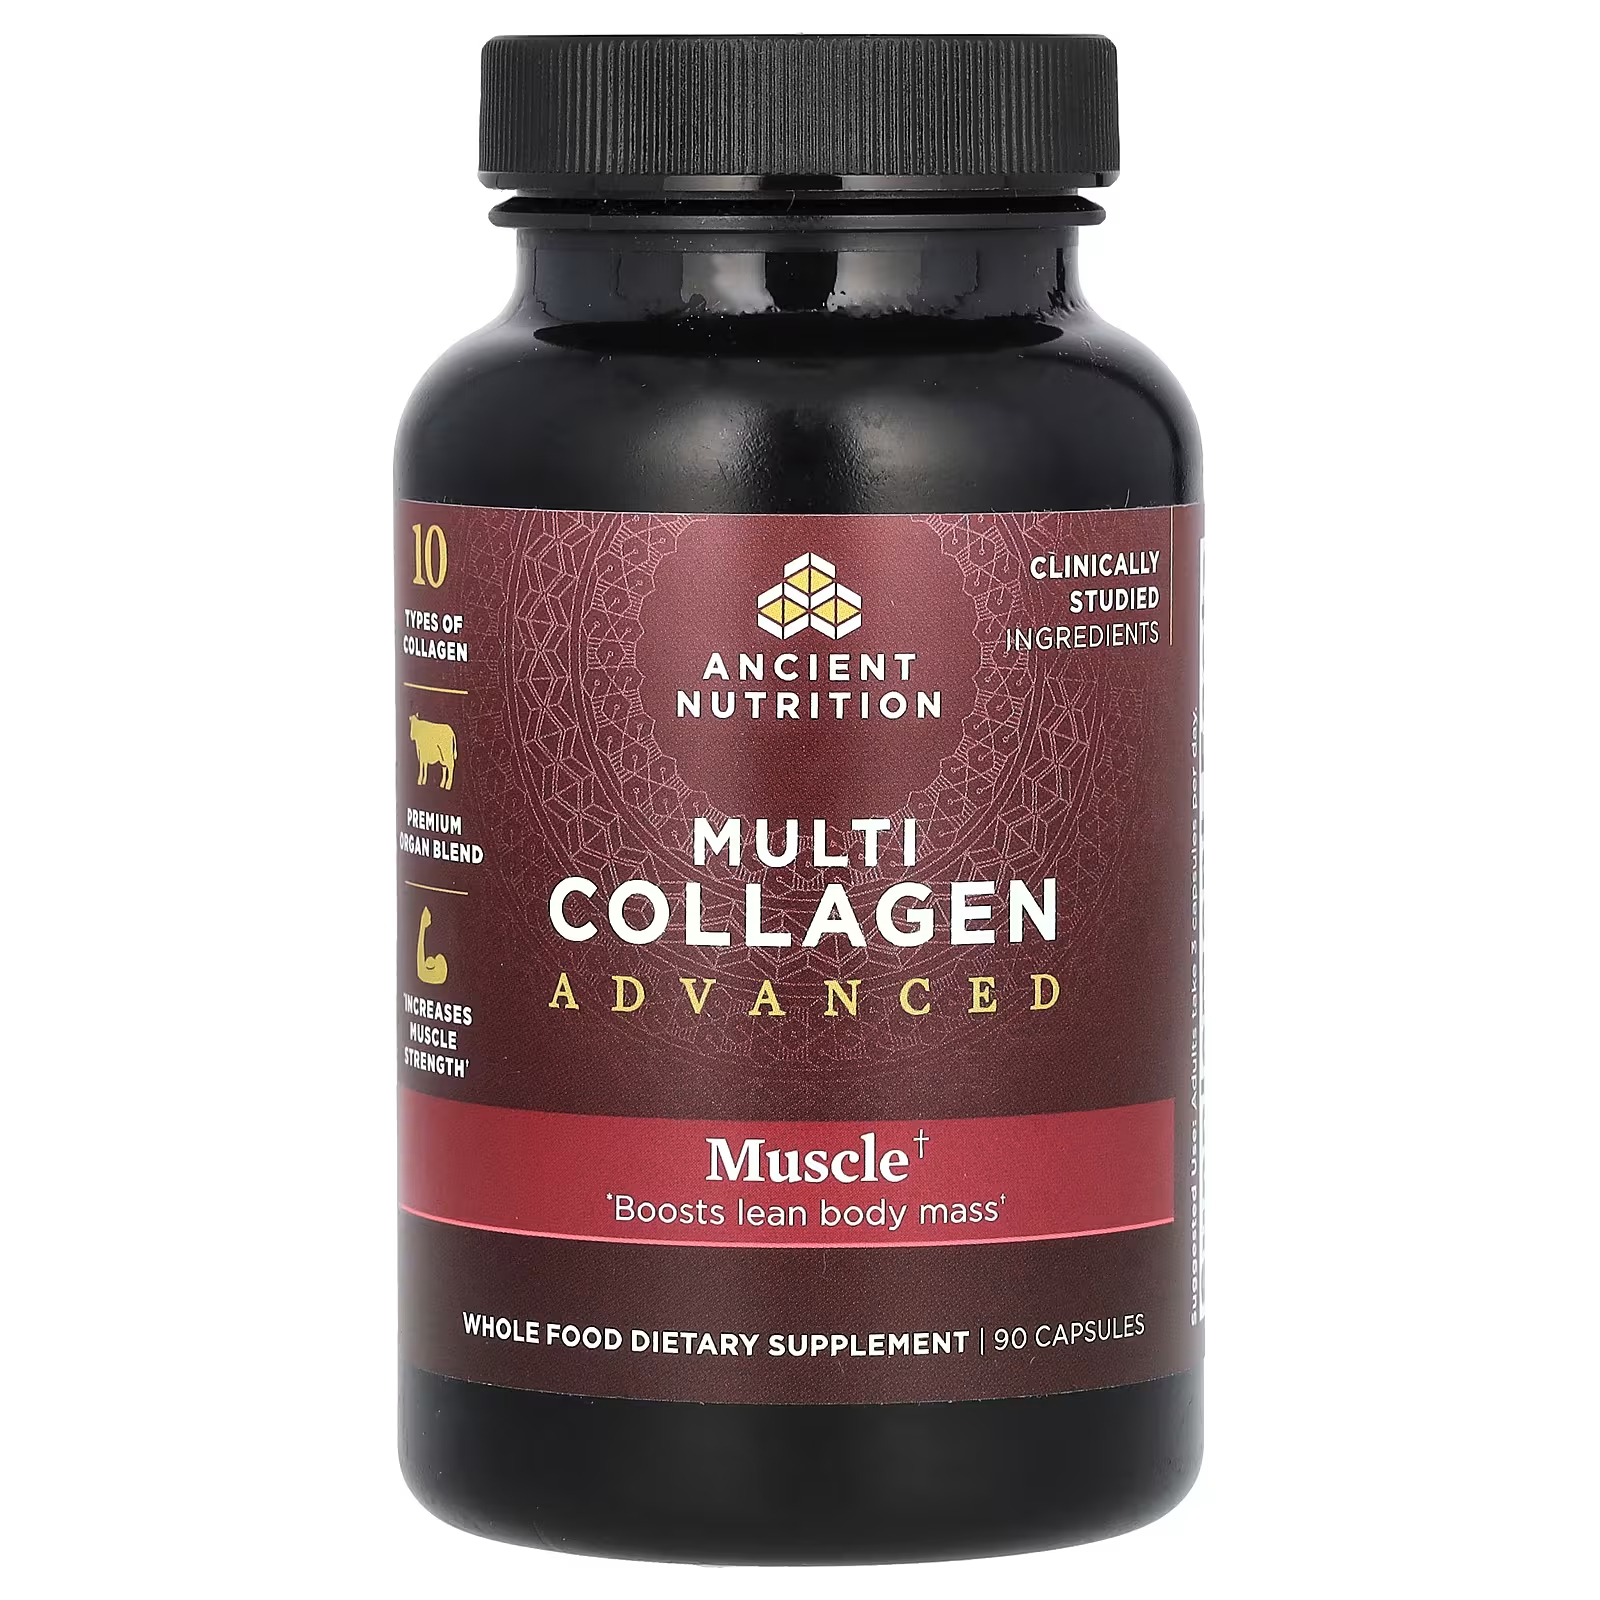 Пищевая добавка Ancient Nutrition Multi Collagen Advanced Muscle, 90 капсул